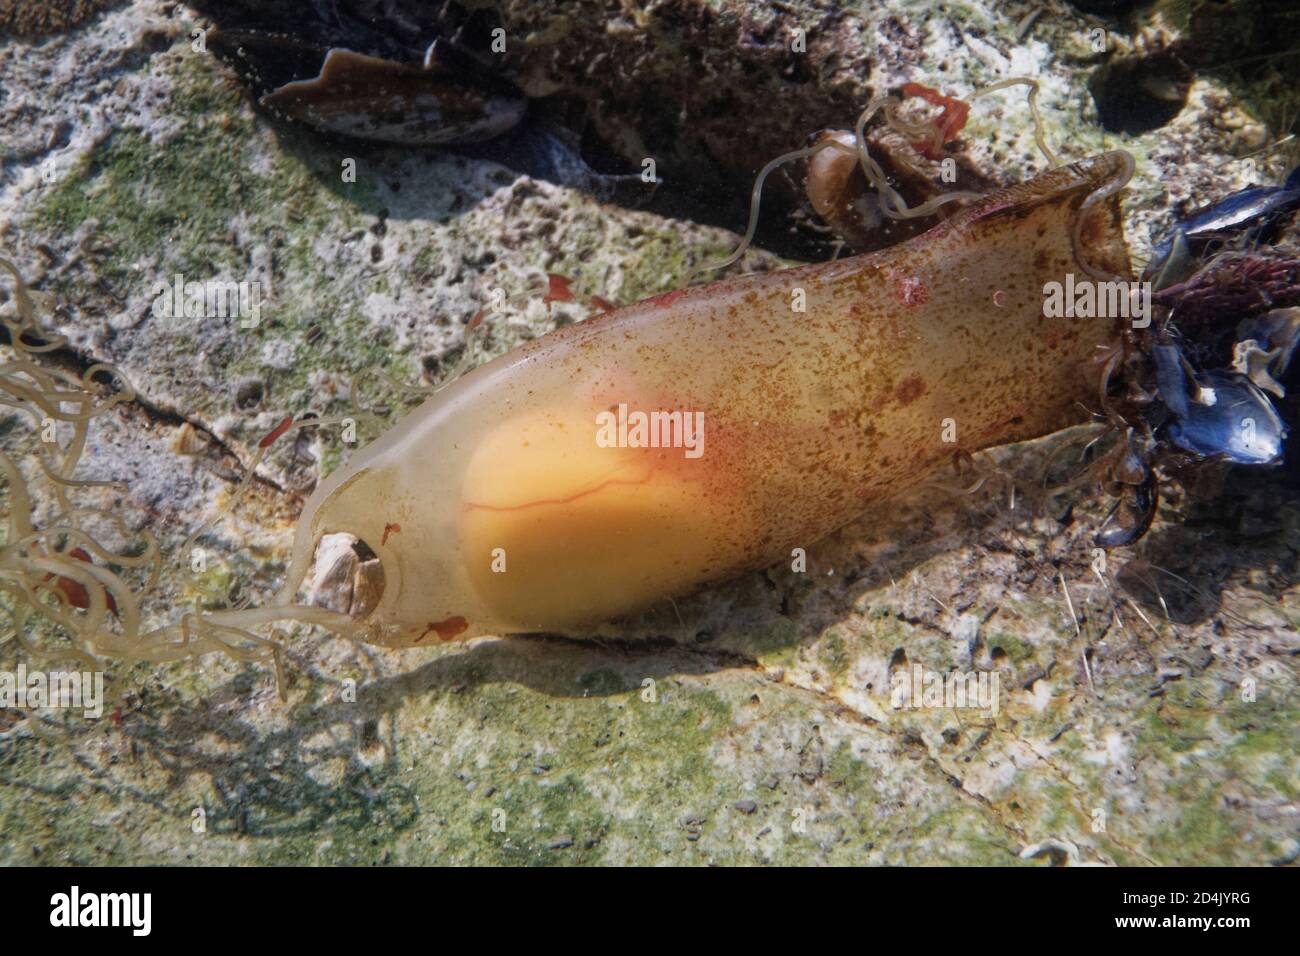 Small-spotted cat shark egg casing (mermaid's purse) | Flickr